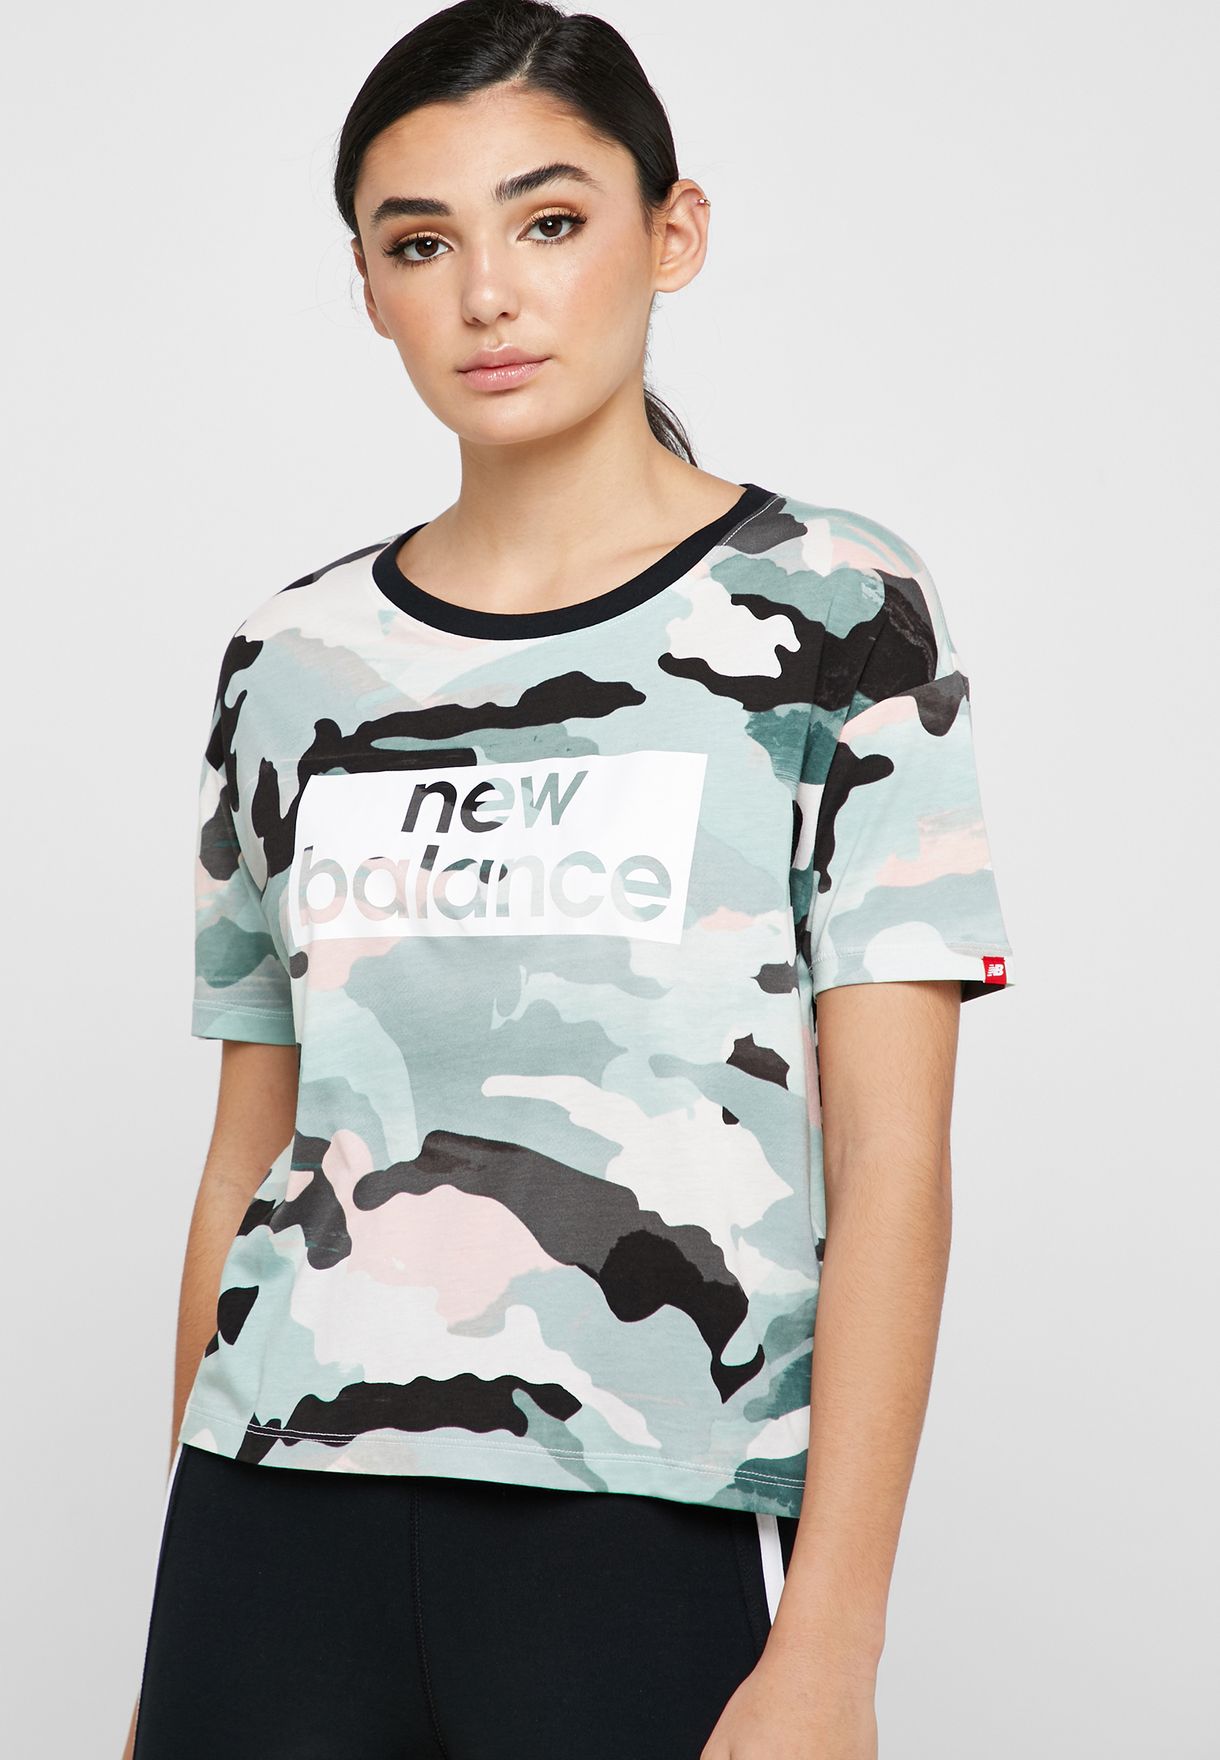 new balance camouflage shirt